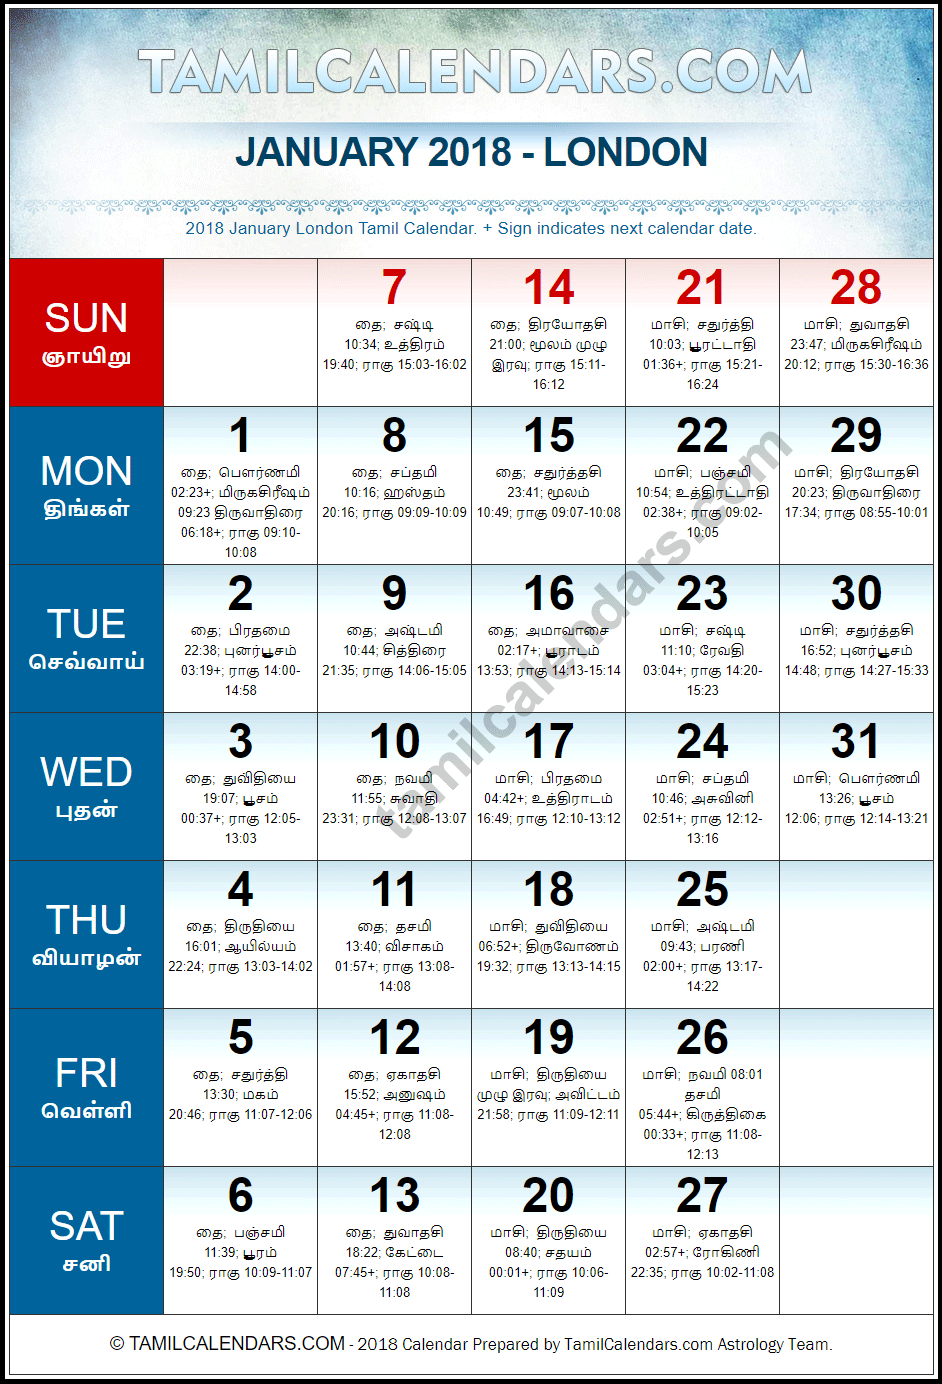 January 2018 Tamil Calendar for London, UK